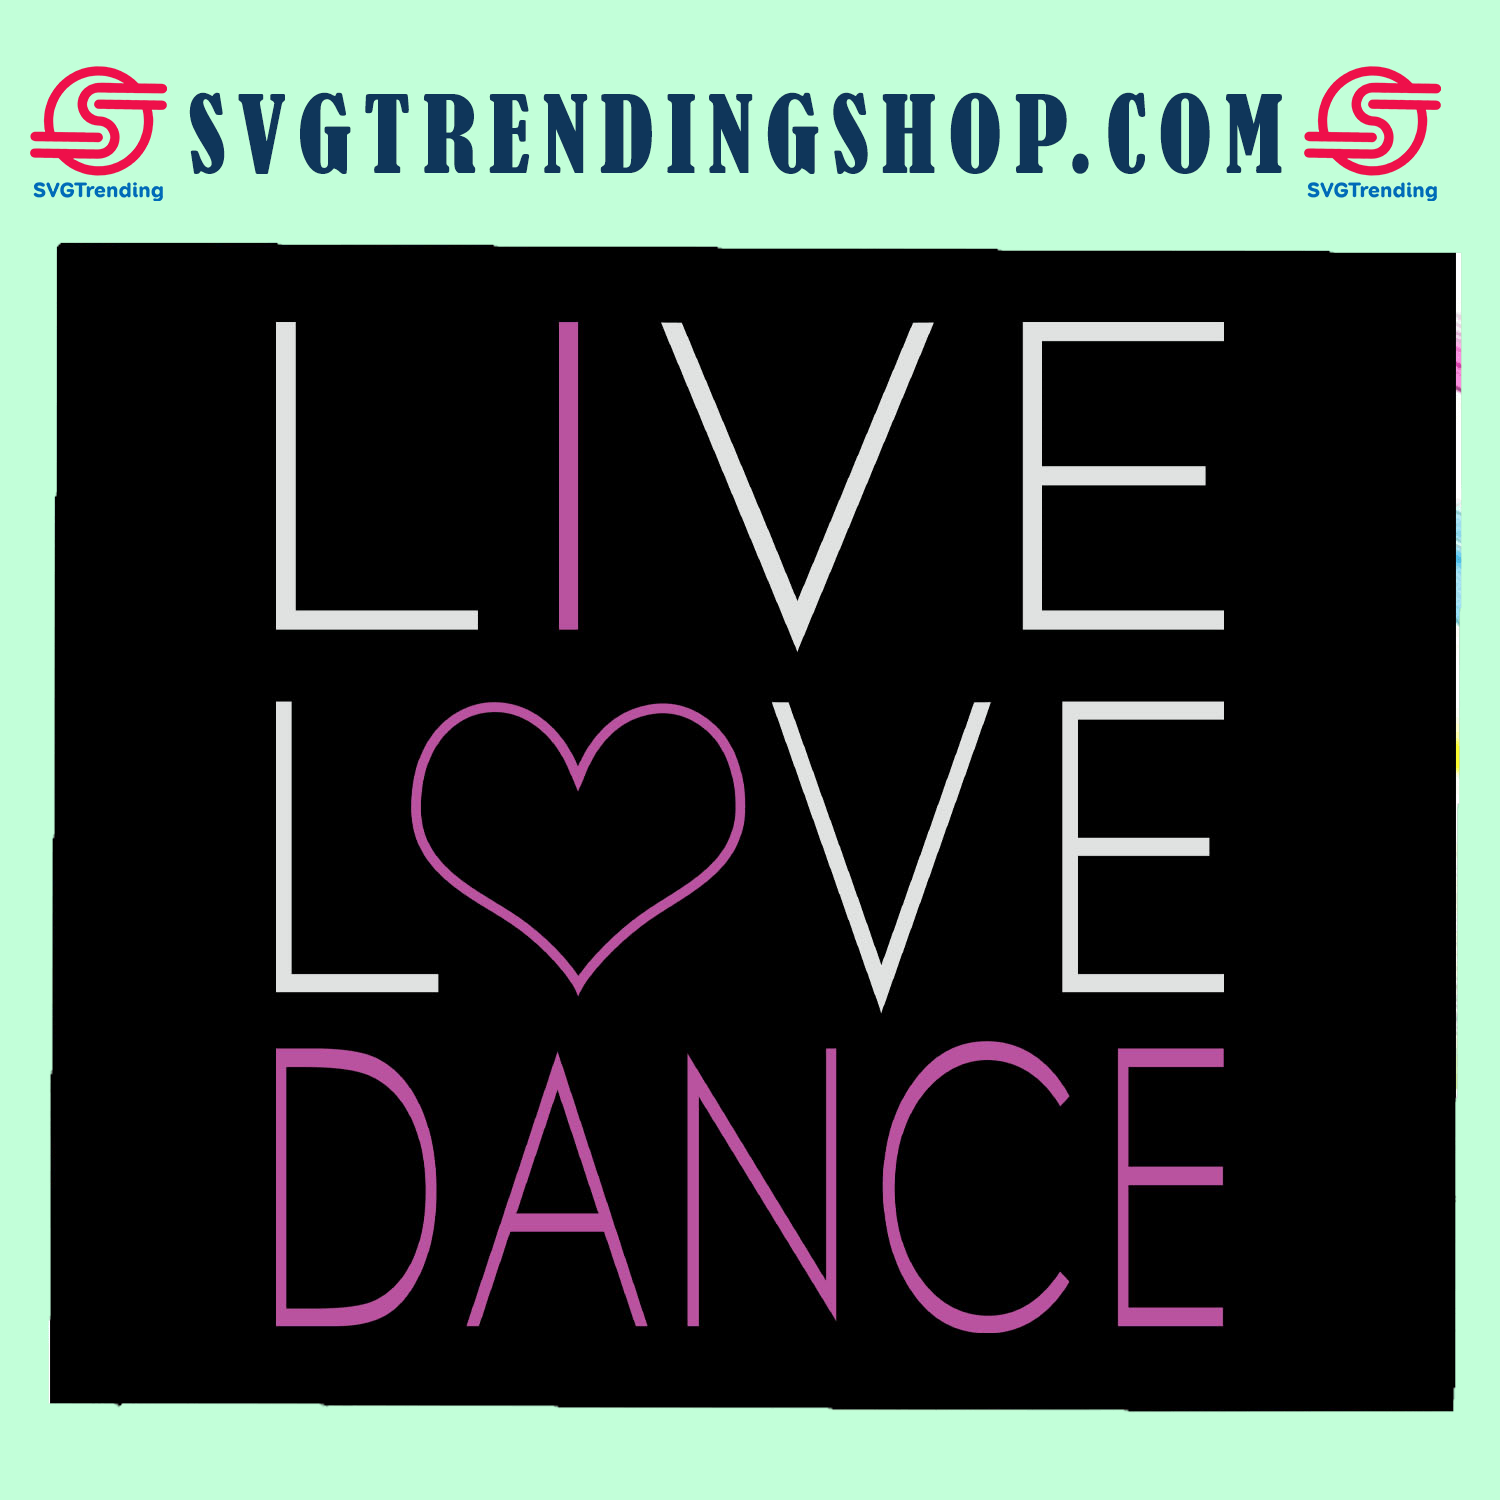 Live love dance, I love dance, heart svg, dance squad, dancer quotes